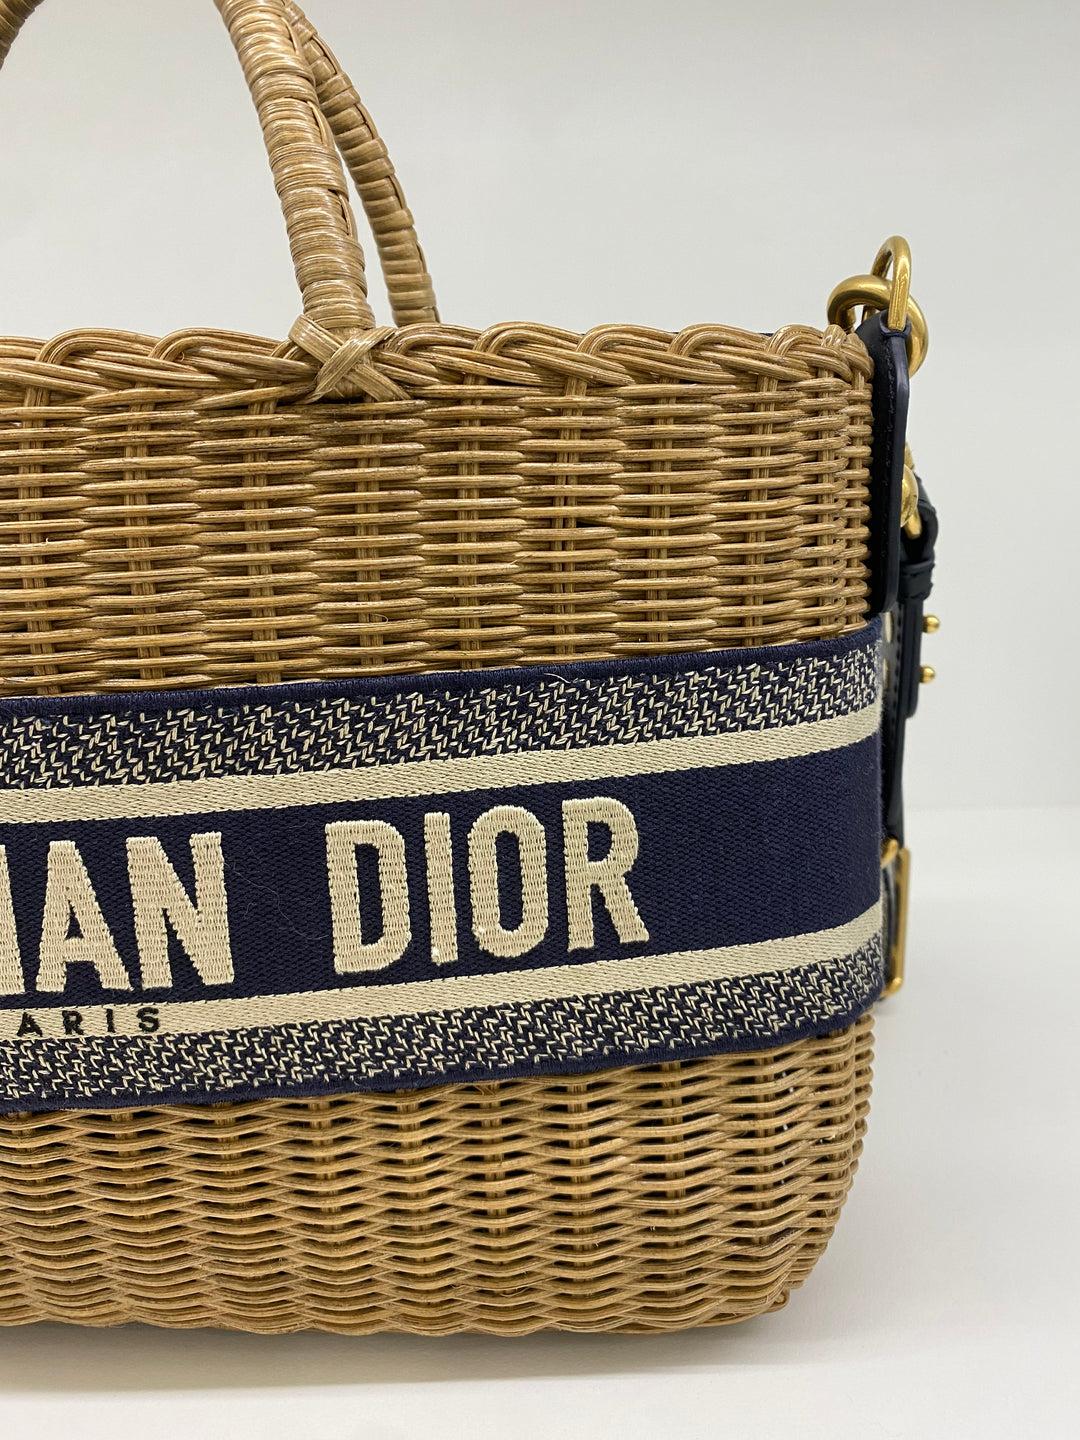 Women's Christian Dior Wicker Bag For Sale